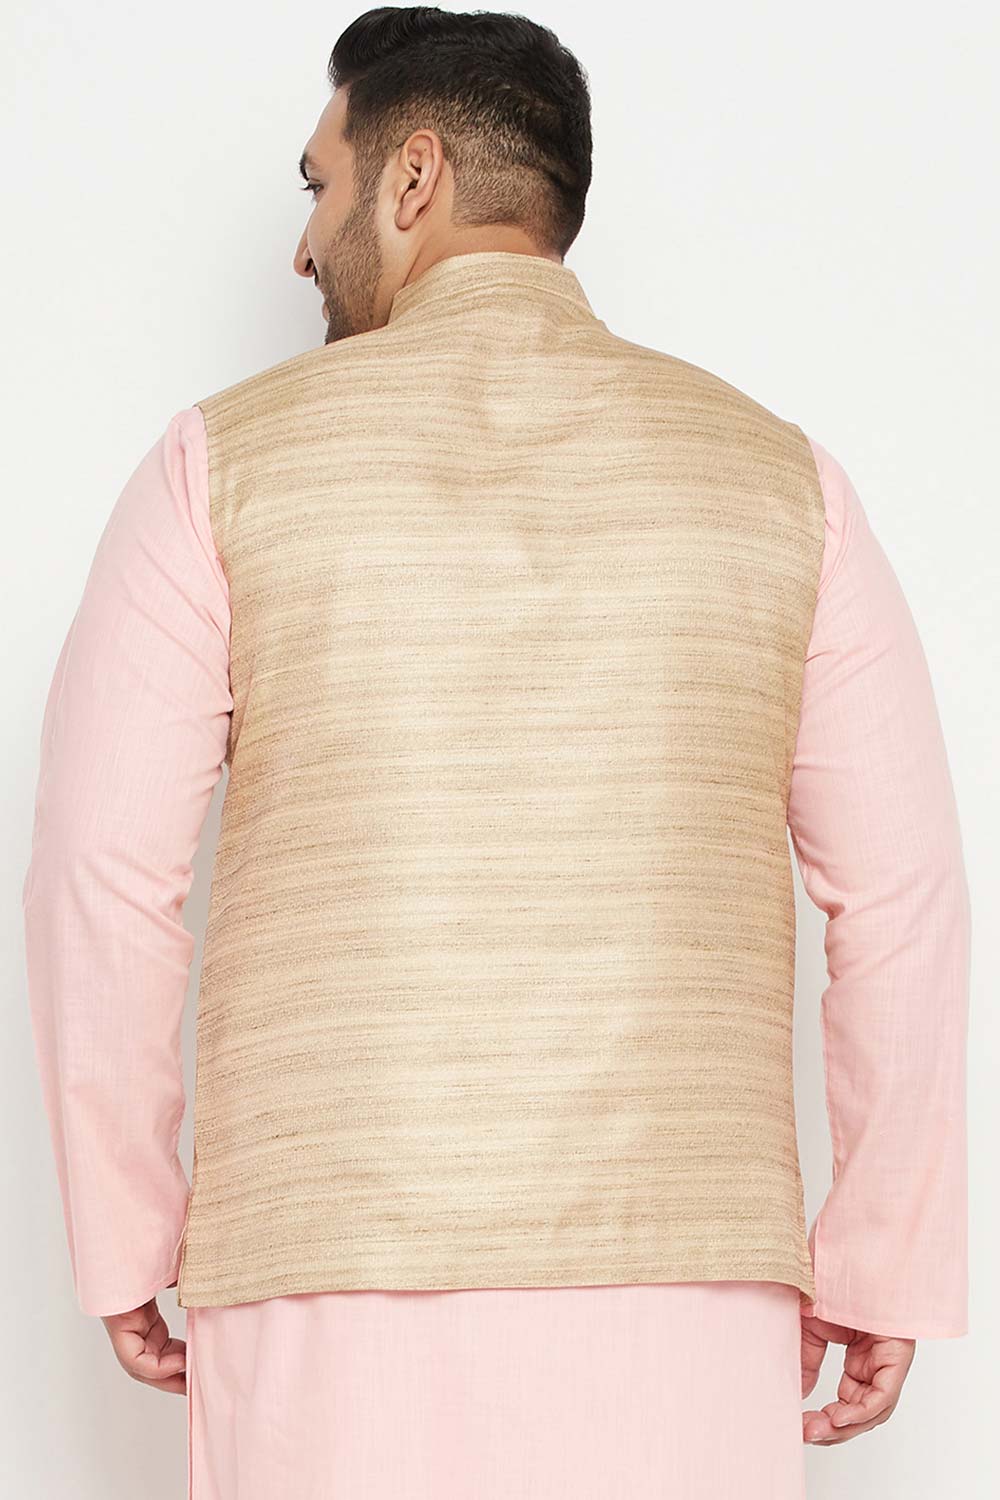 Buy Men's Silk Blend Solid Nehru Jacket in Beige - Back